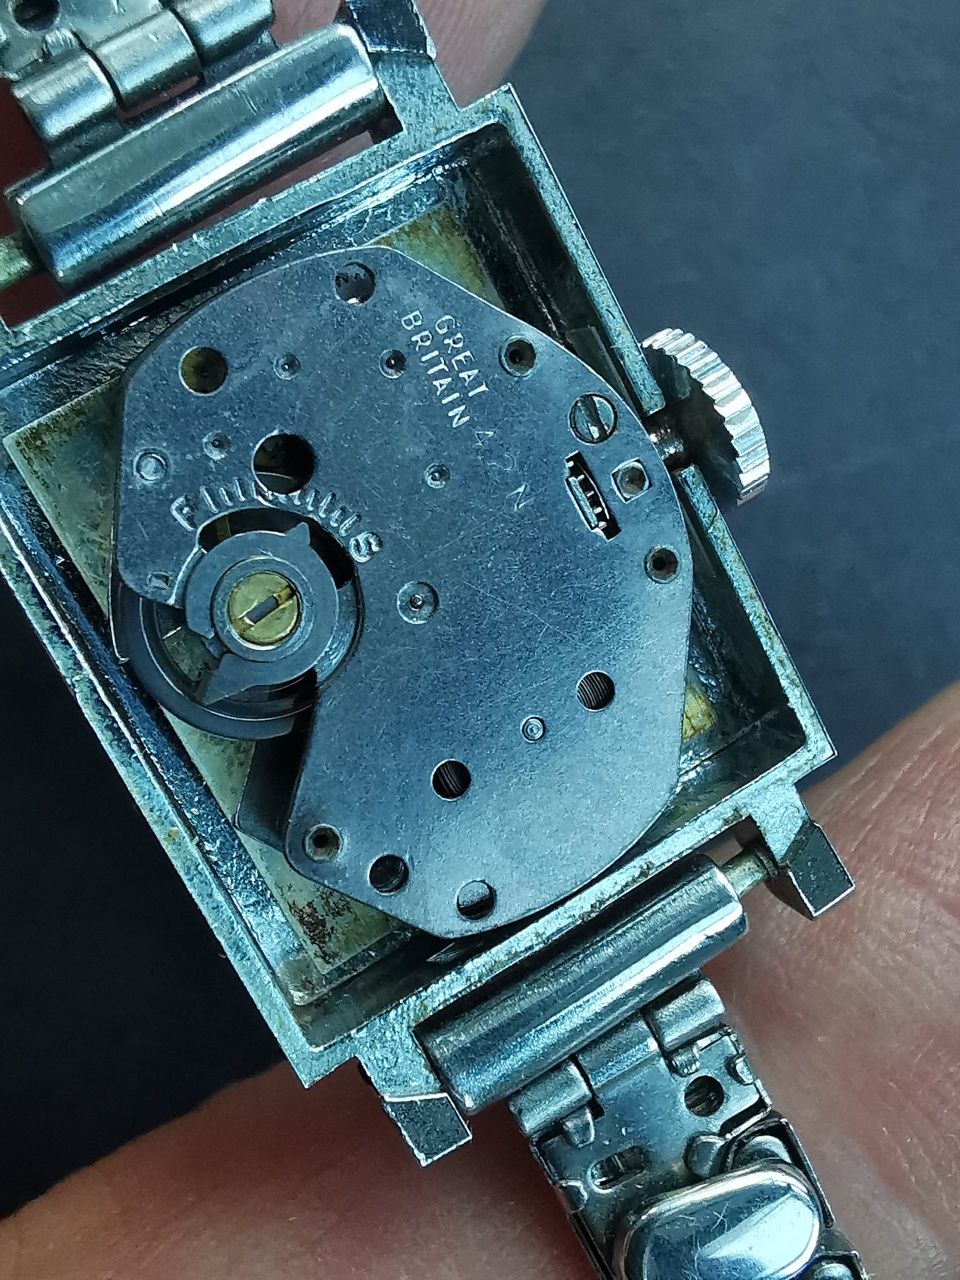 Ceas Timex Mecanic - 17,5x20,5 mm - Dama